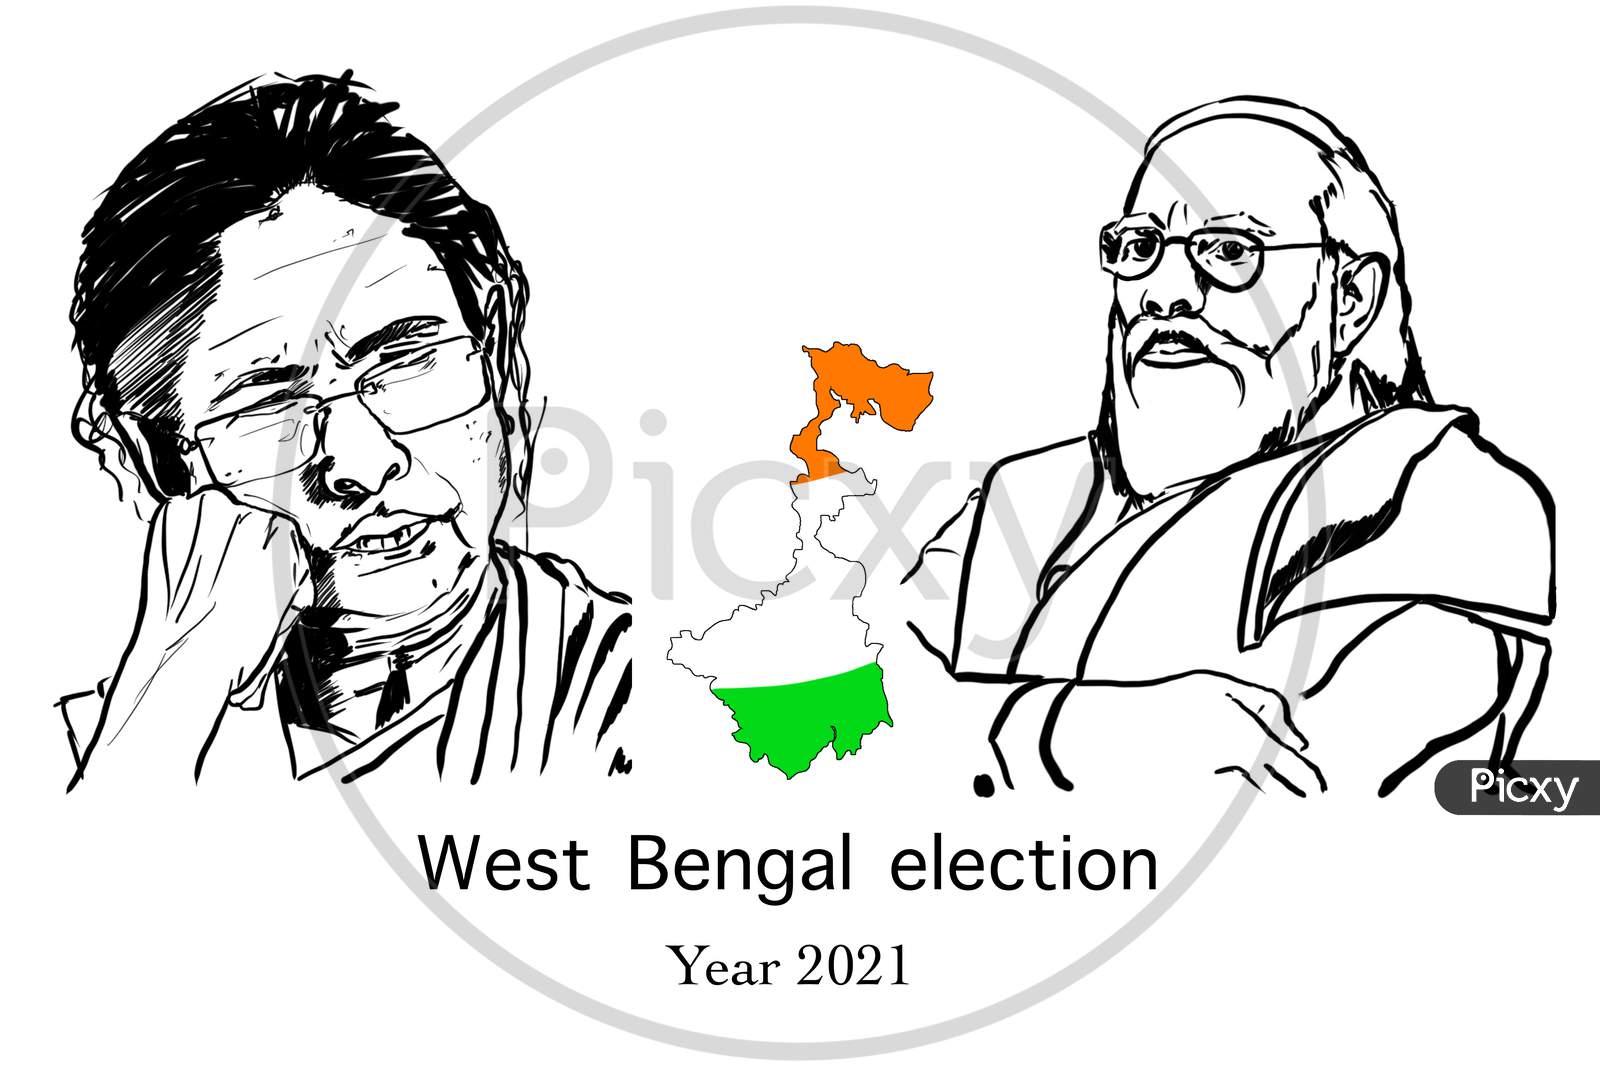 West Bengal Election illustration.